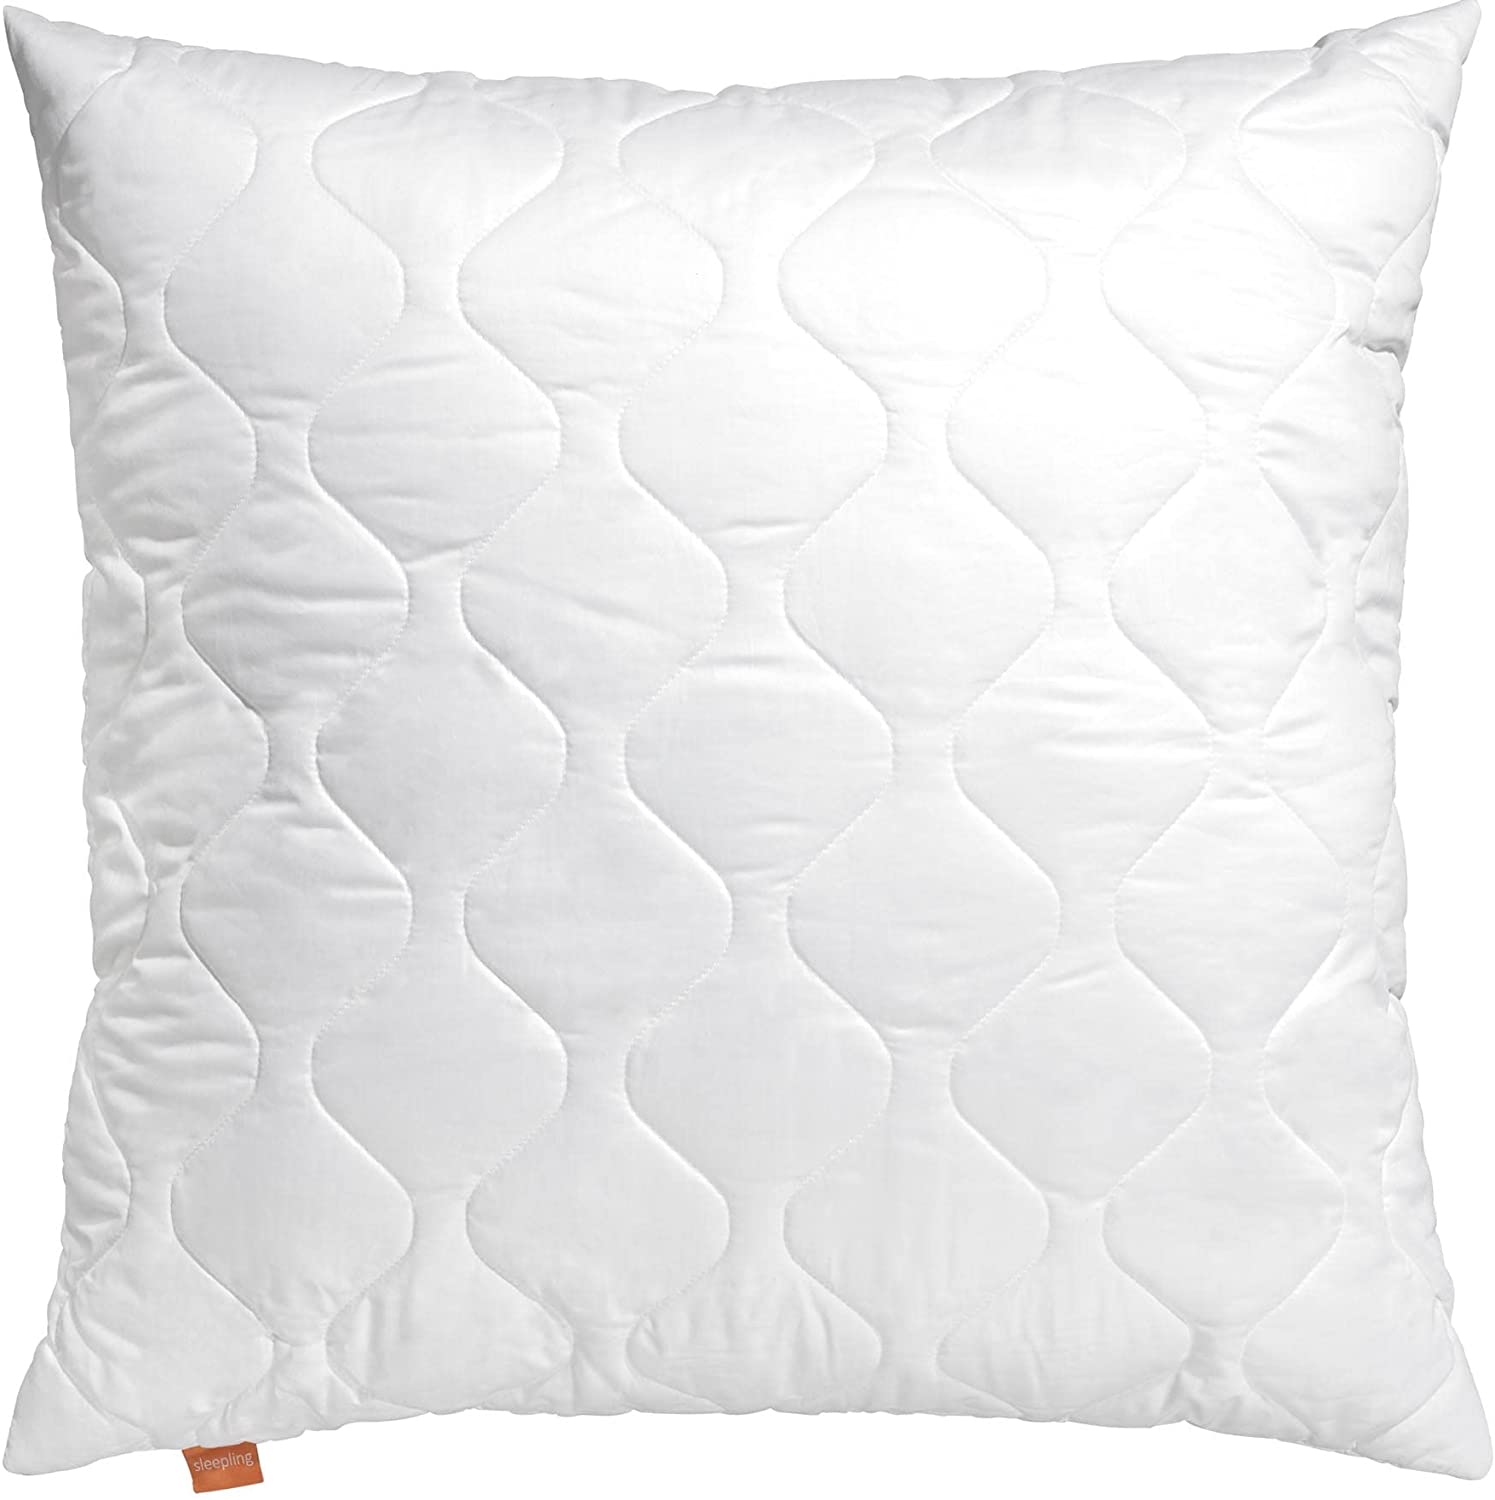 sleepling 196527 Set of 2 Basic 100 pillows | decorative pillow | sofa pillow | Ökotex | washable up to 60 degrees | Made in EU | filling guarantee | size guarantee | 30 x 30 cm, white